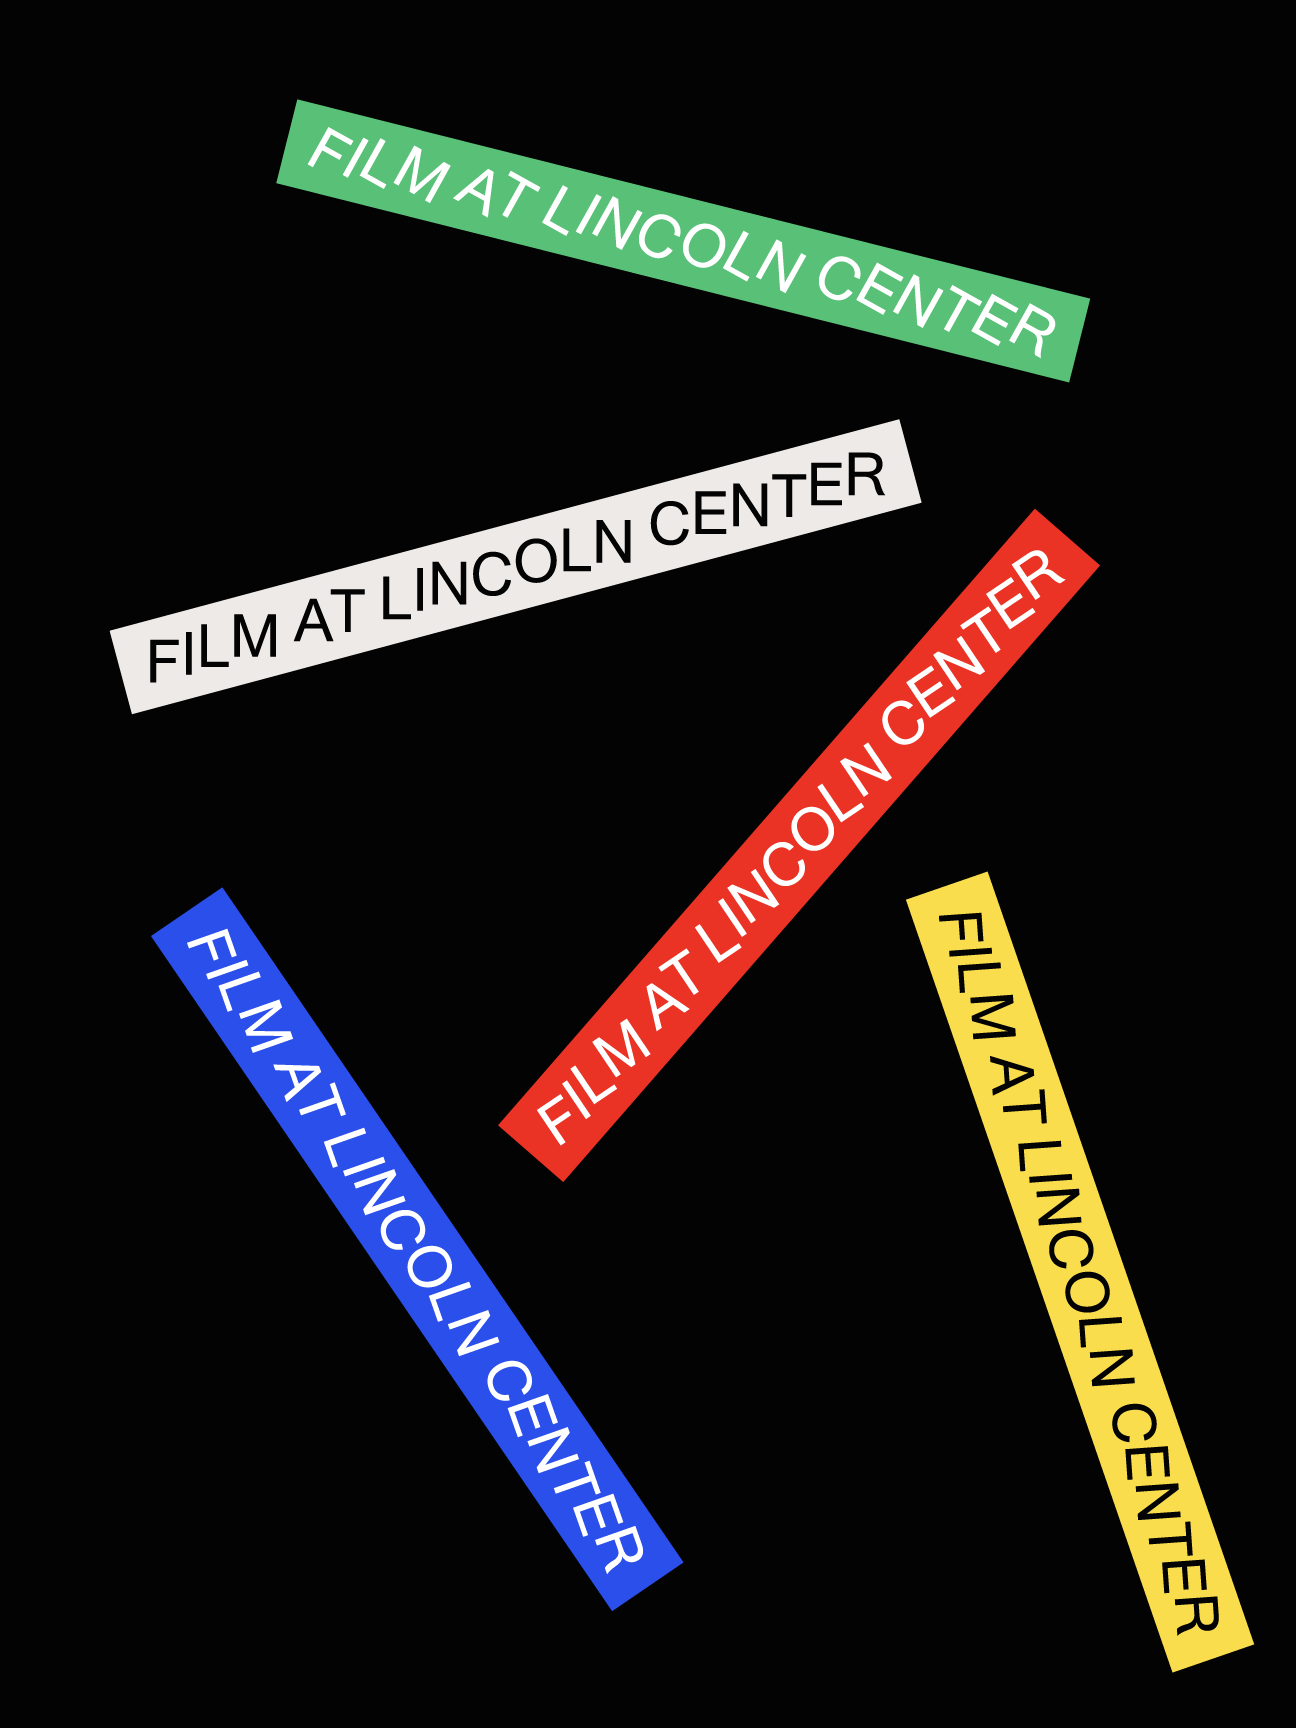 Joe Wright Film at Lincoln Center